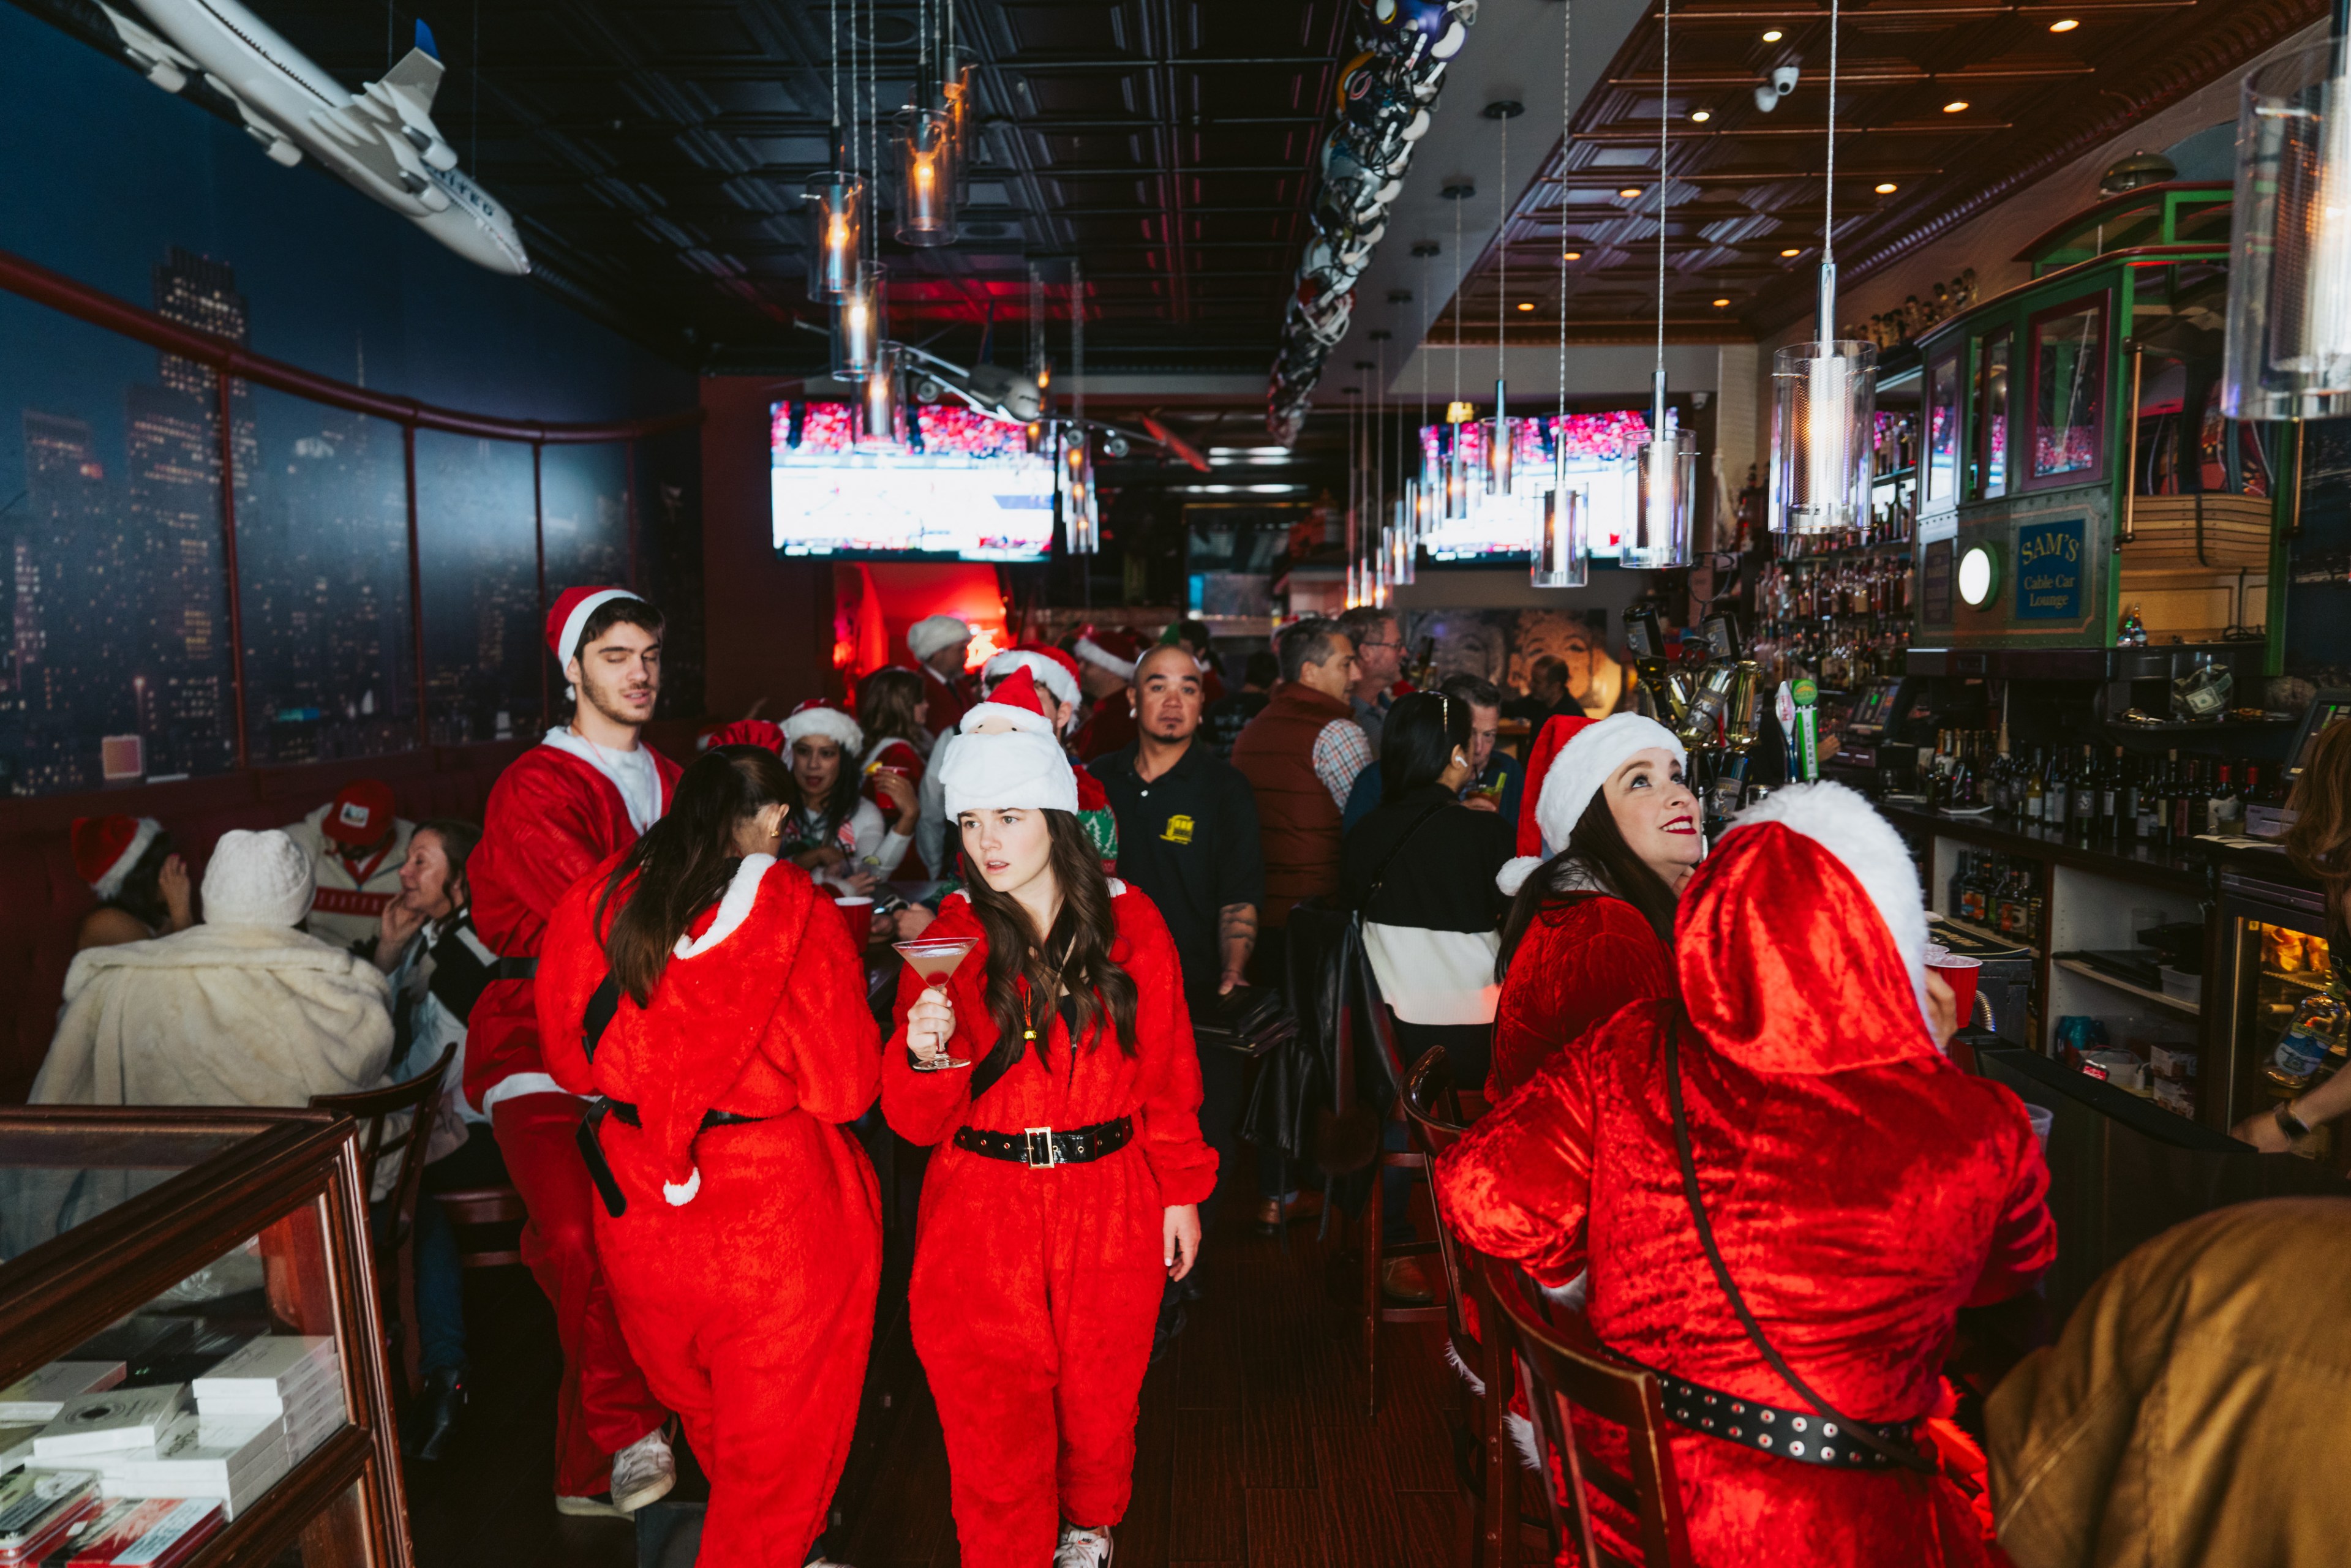 A bar full of patrons dressed as Santa Claus.